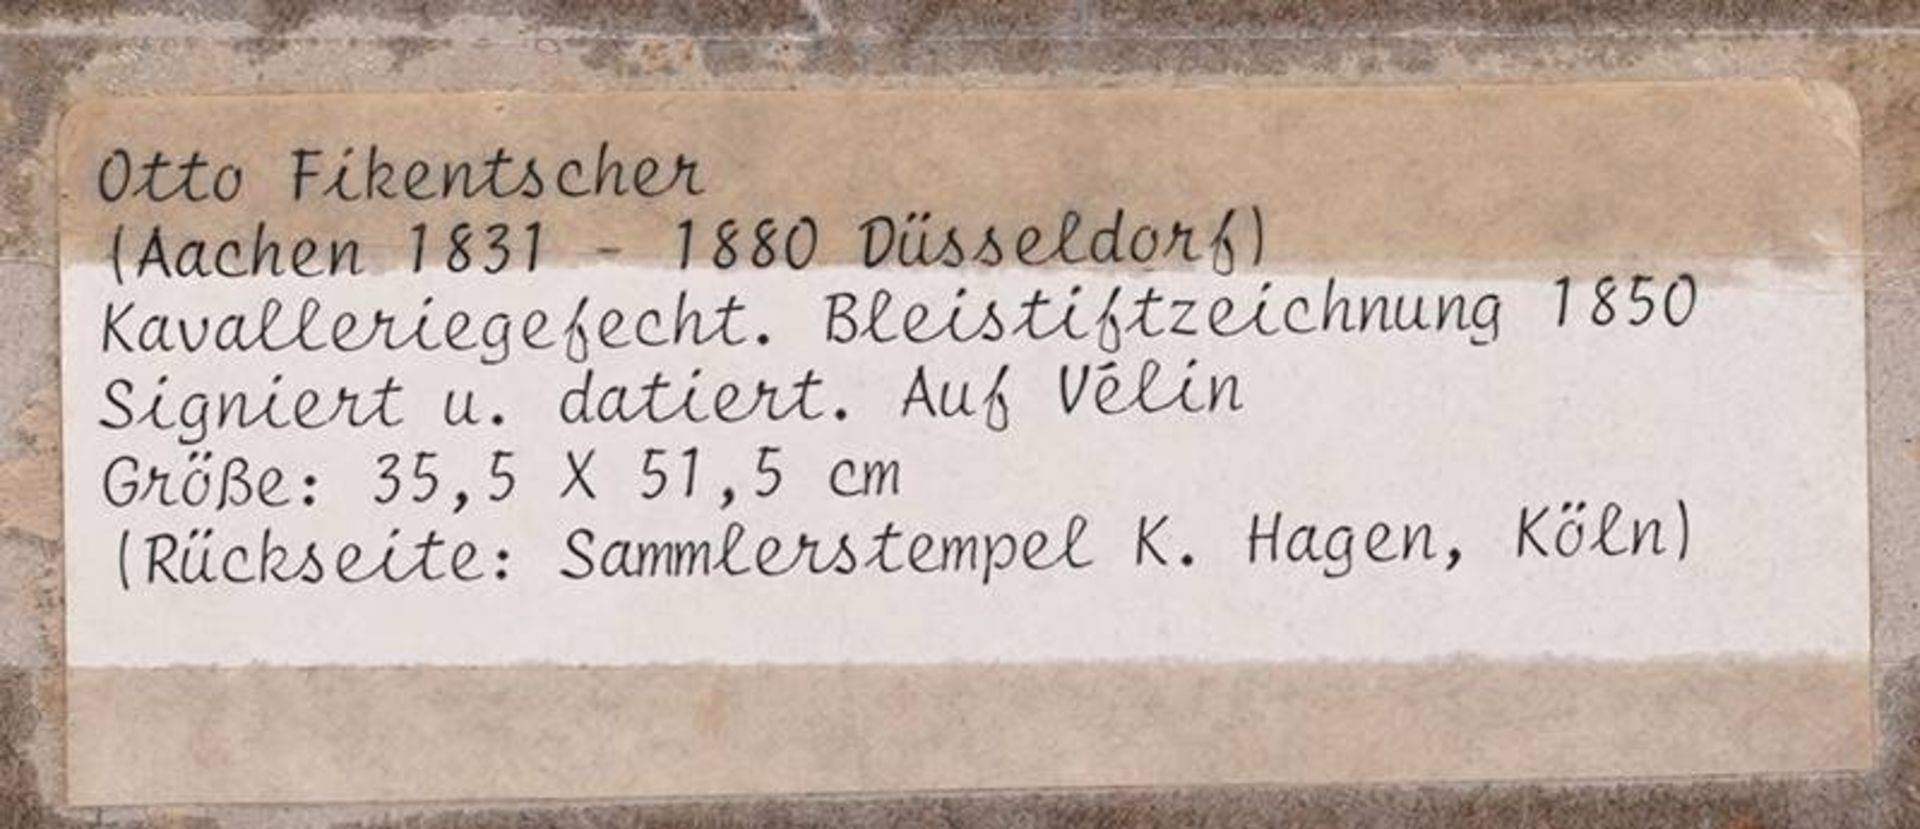 Fikentscher, Otto Clemens - Image 4 of 4